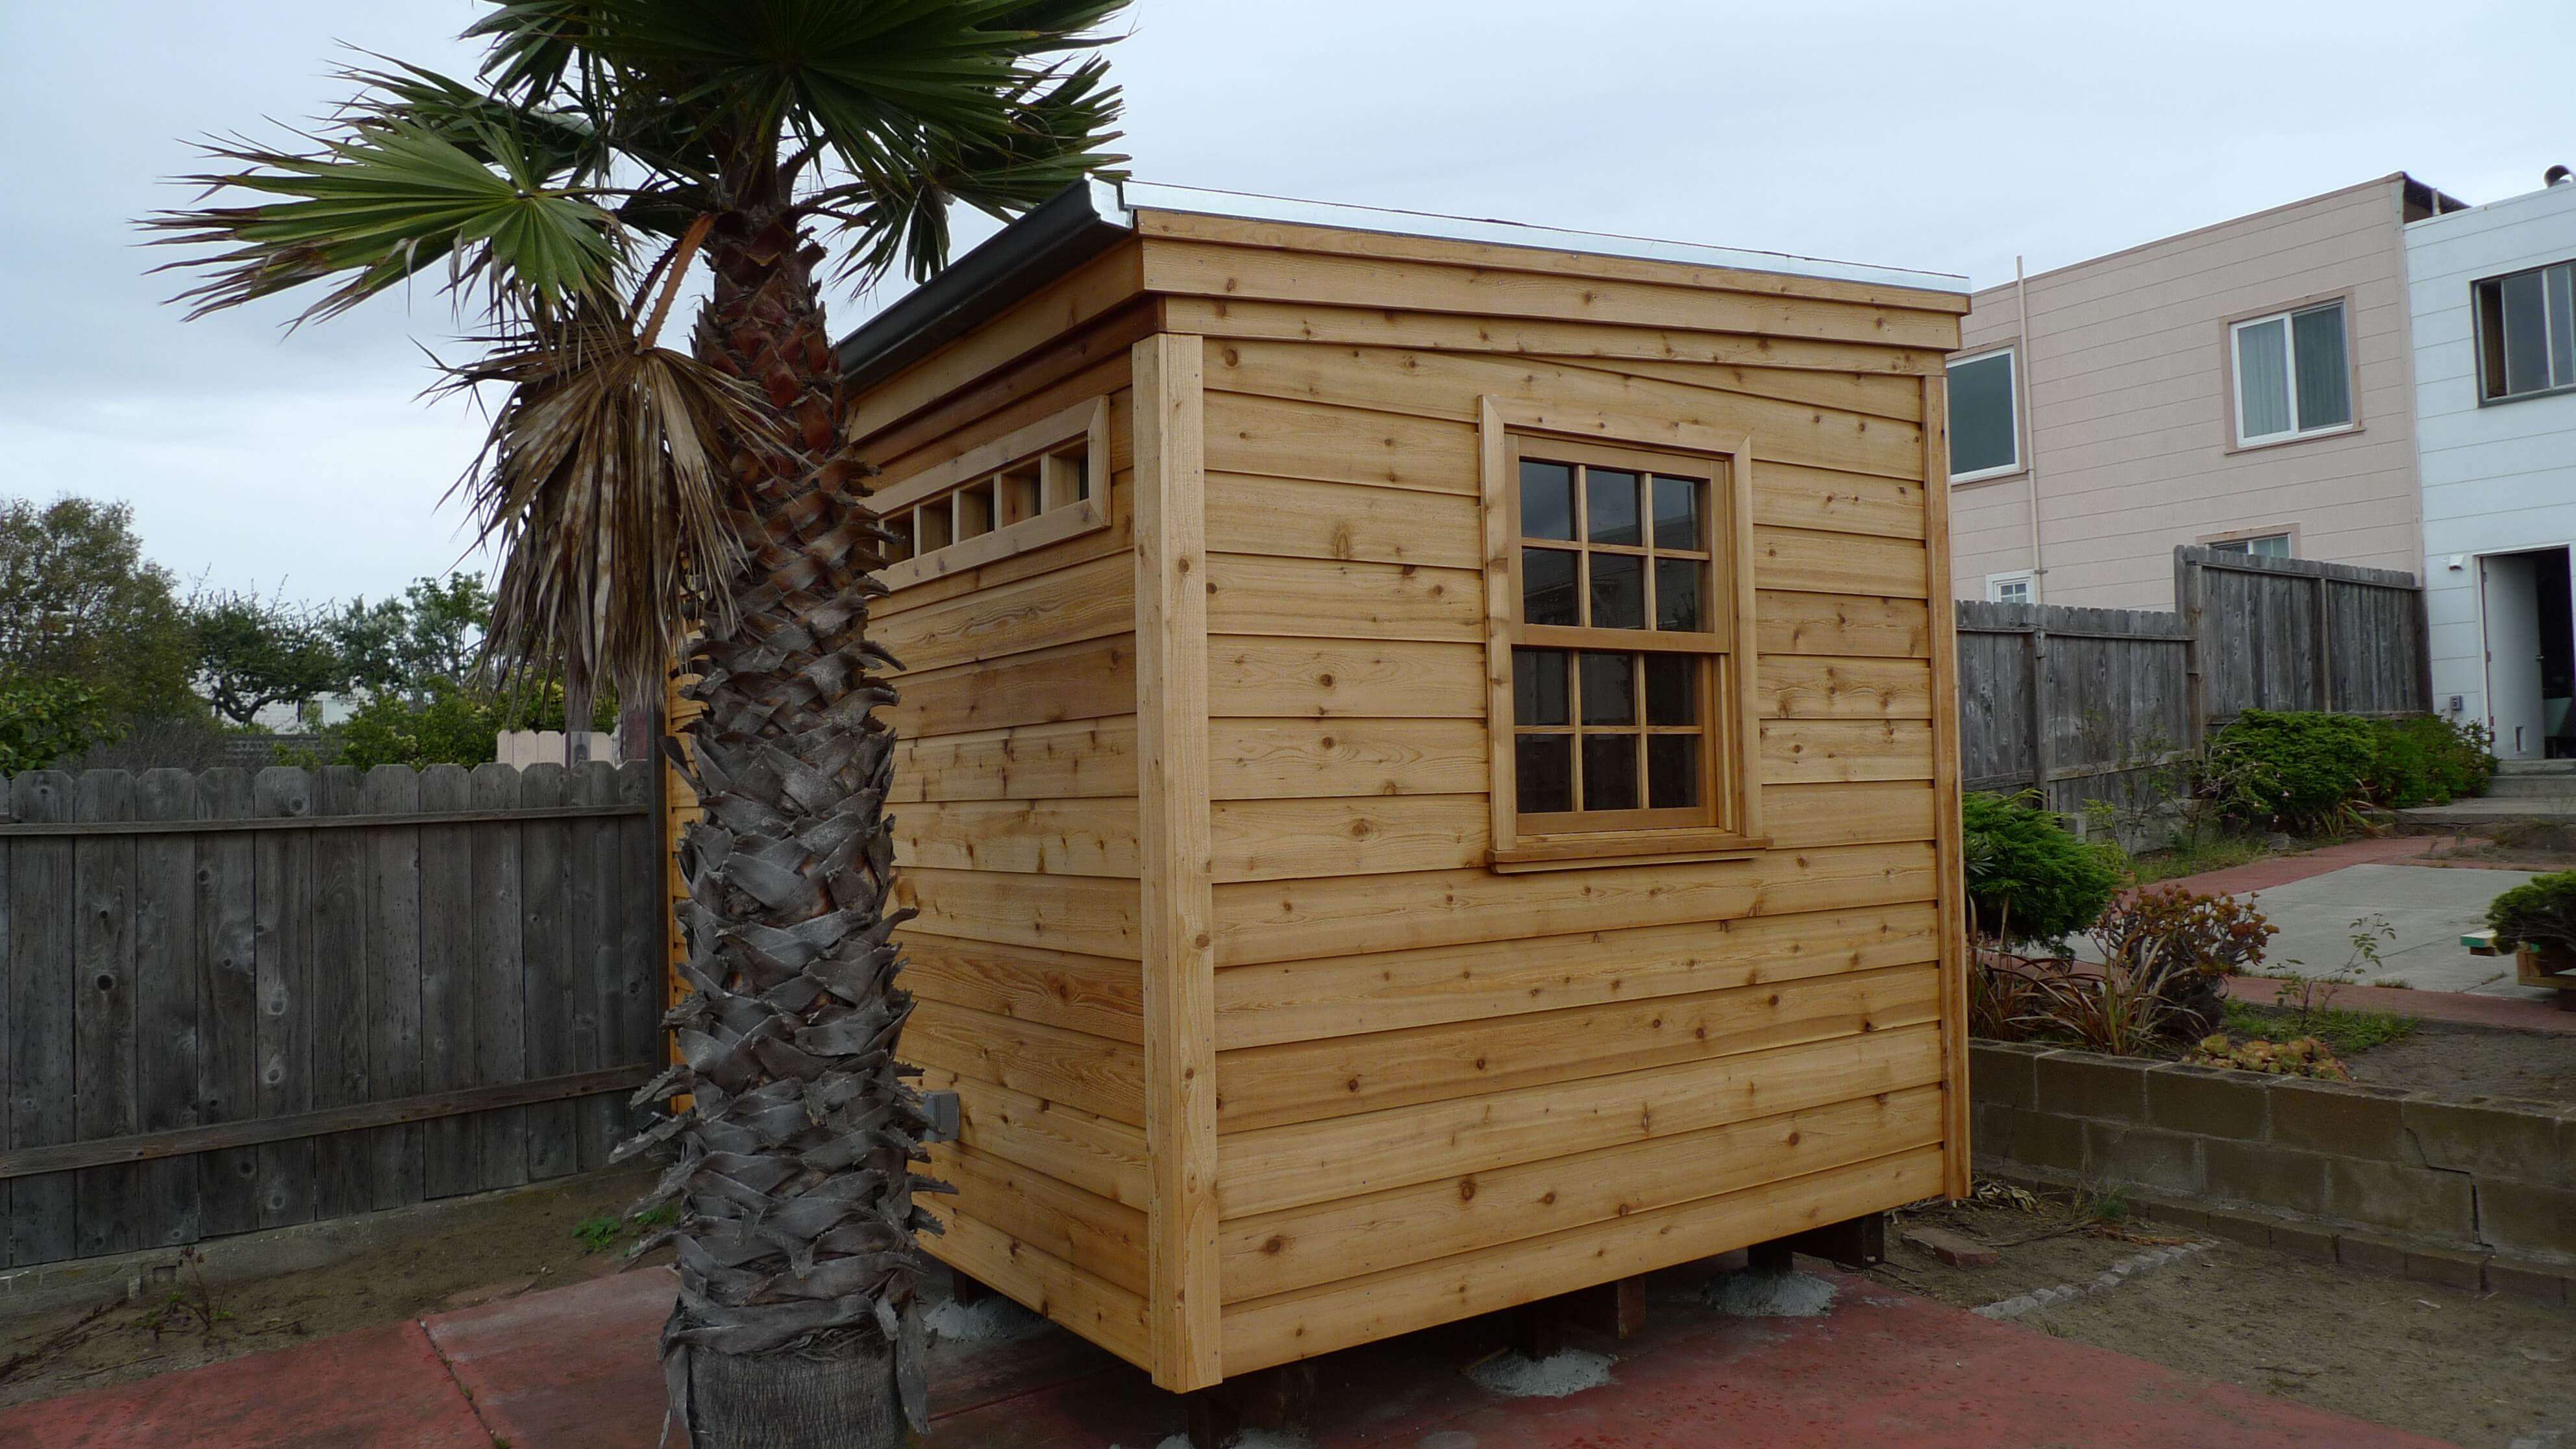 Urban studio garden shed 8x12 with Solid deluxe single door in San Francisco California. ID number 1